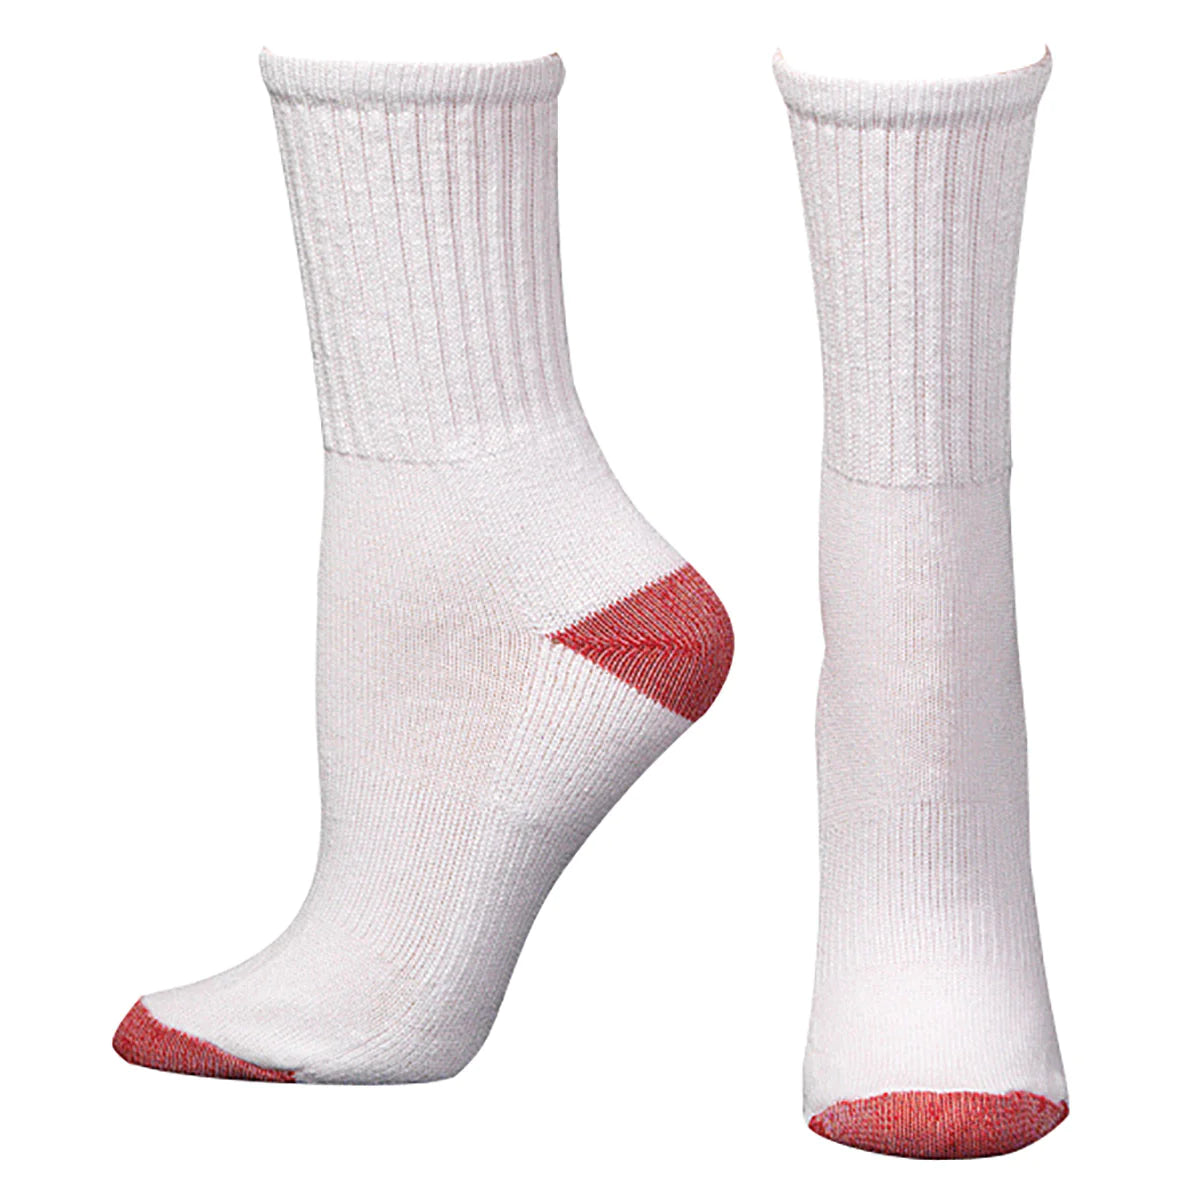 Boot Doctor Kid's White W/ Red Crew Socks - 2 Pair